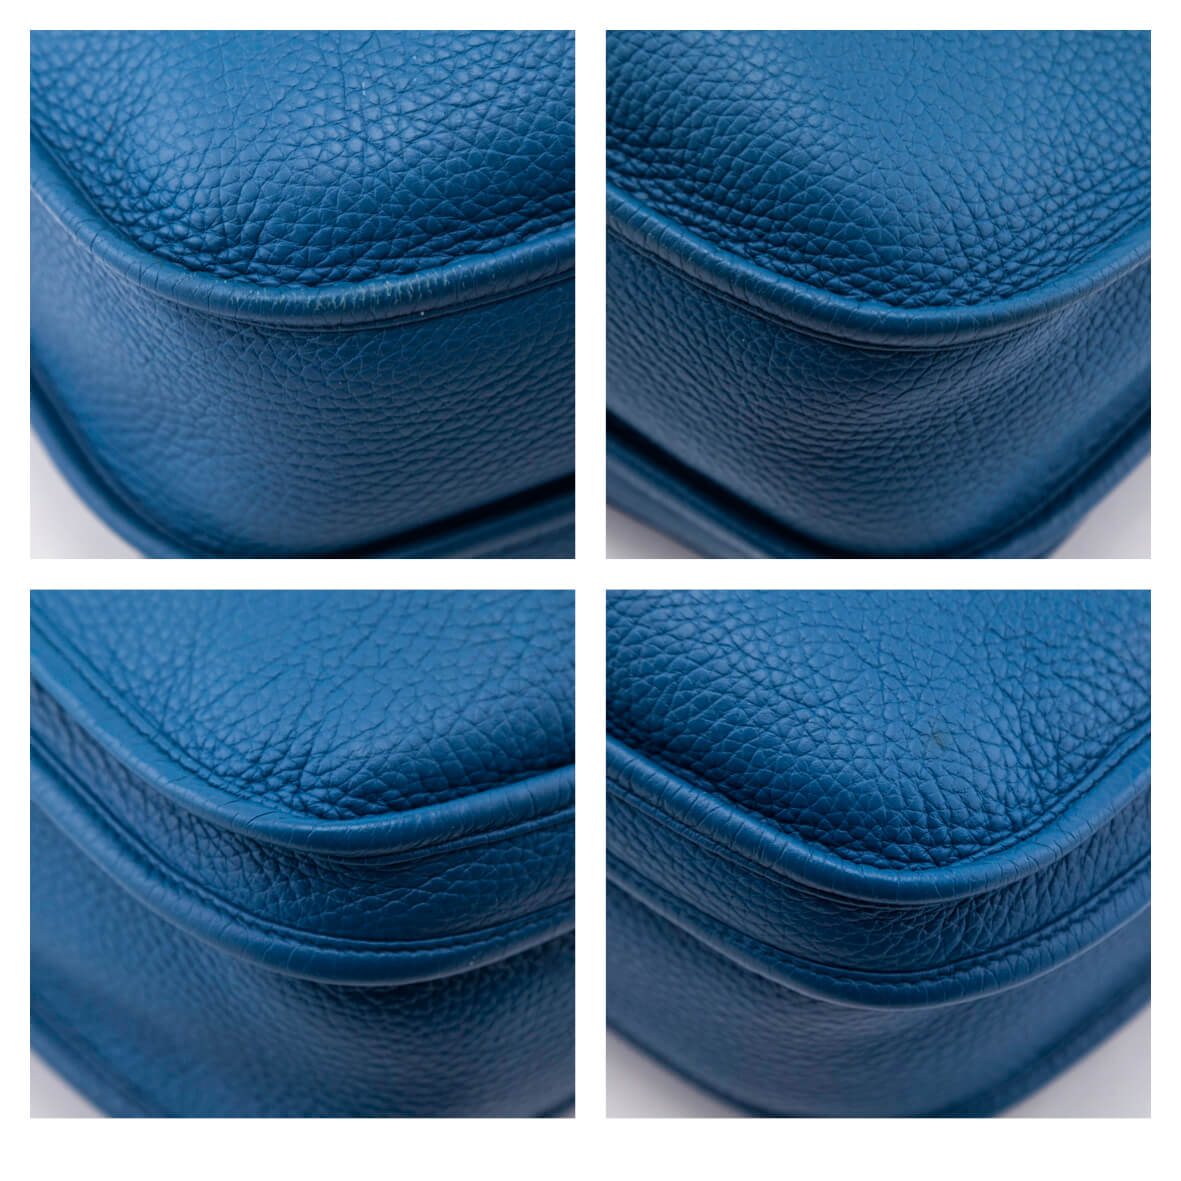 Hermes Bleu Izmir Clemence Evelyne III PM 29 - Love that Bag etc - Preowned Authentic Designer Handbags & Preloved Fashions